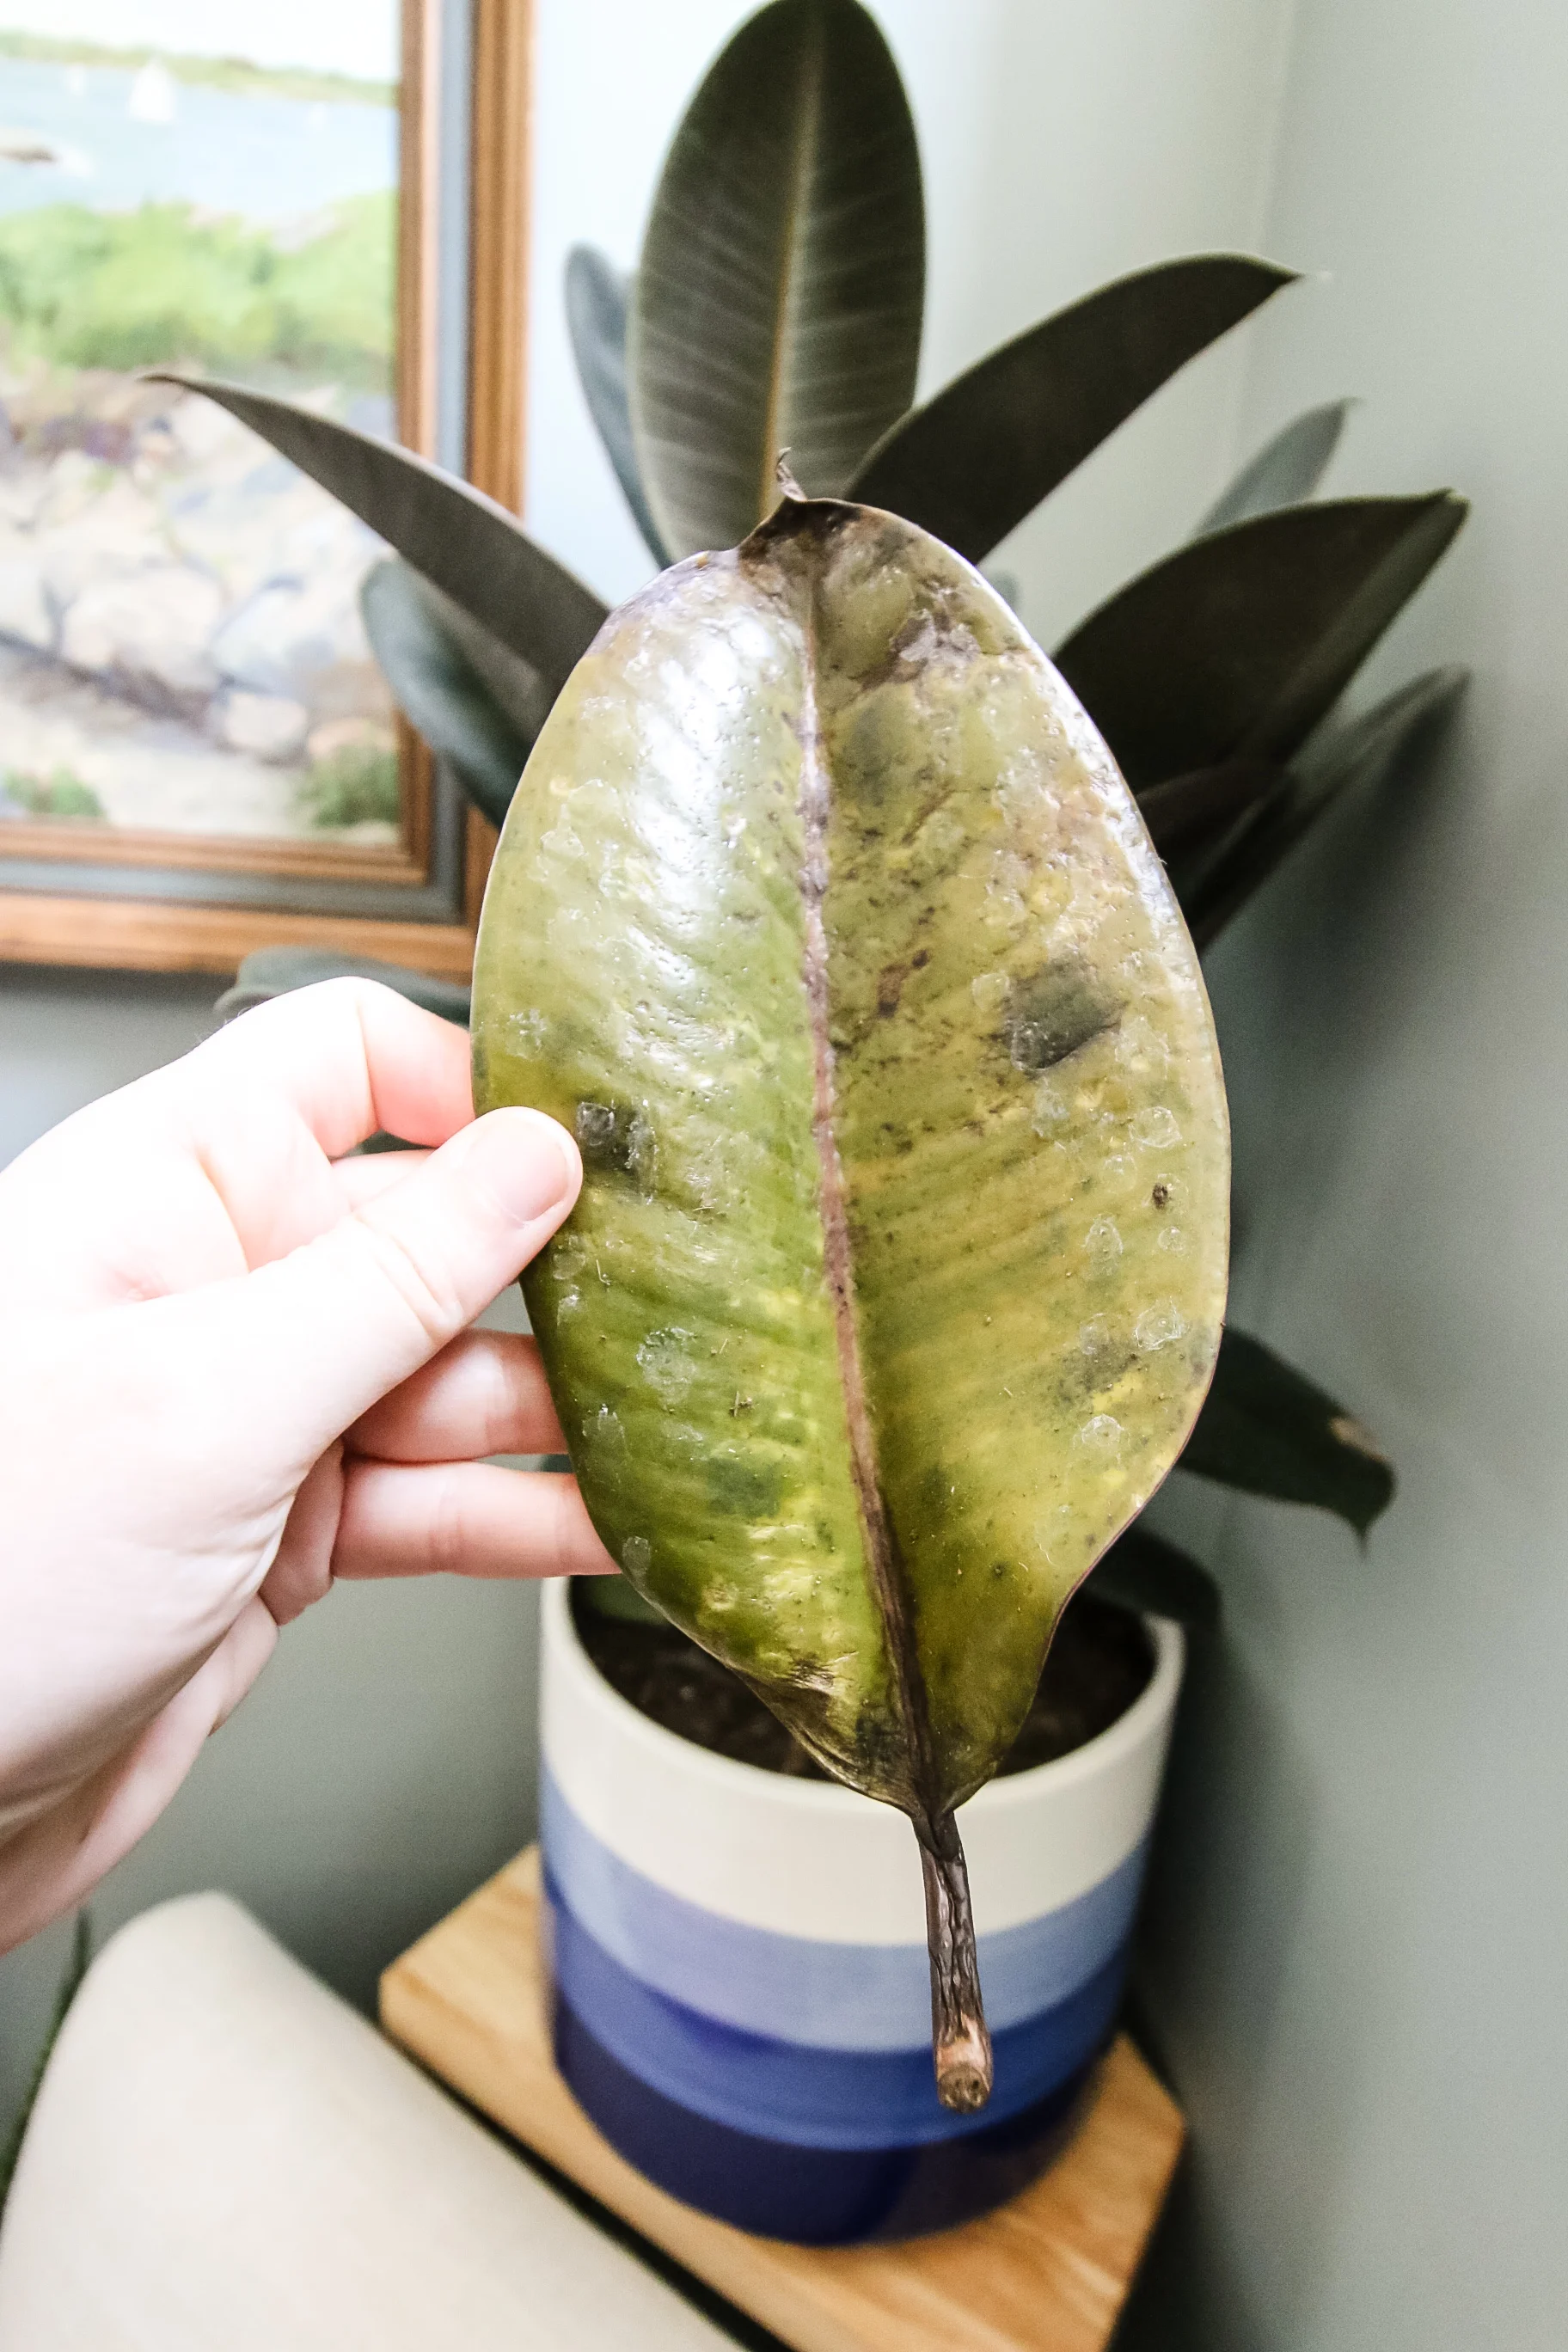 leaf that has fallen off a rubber plant